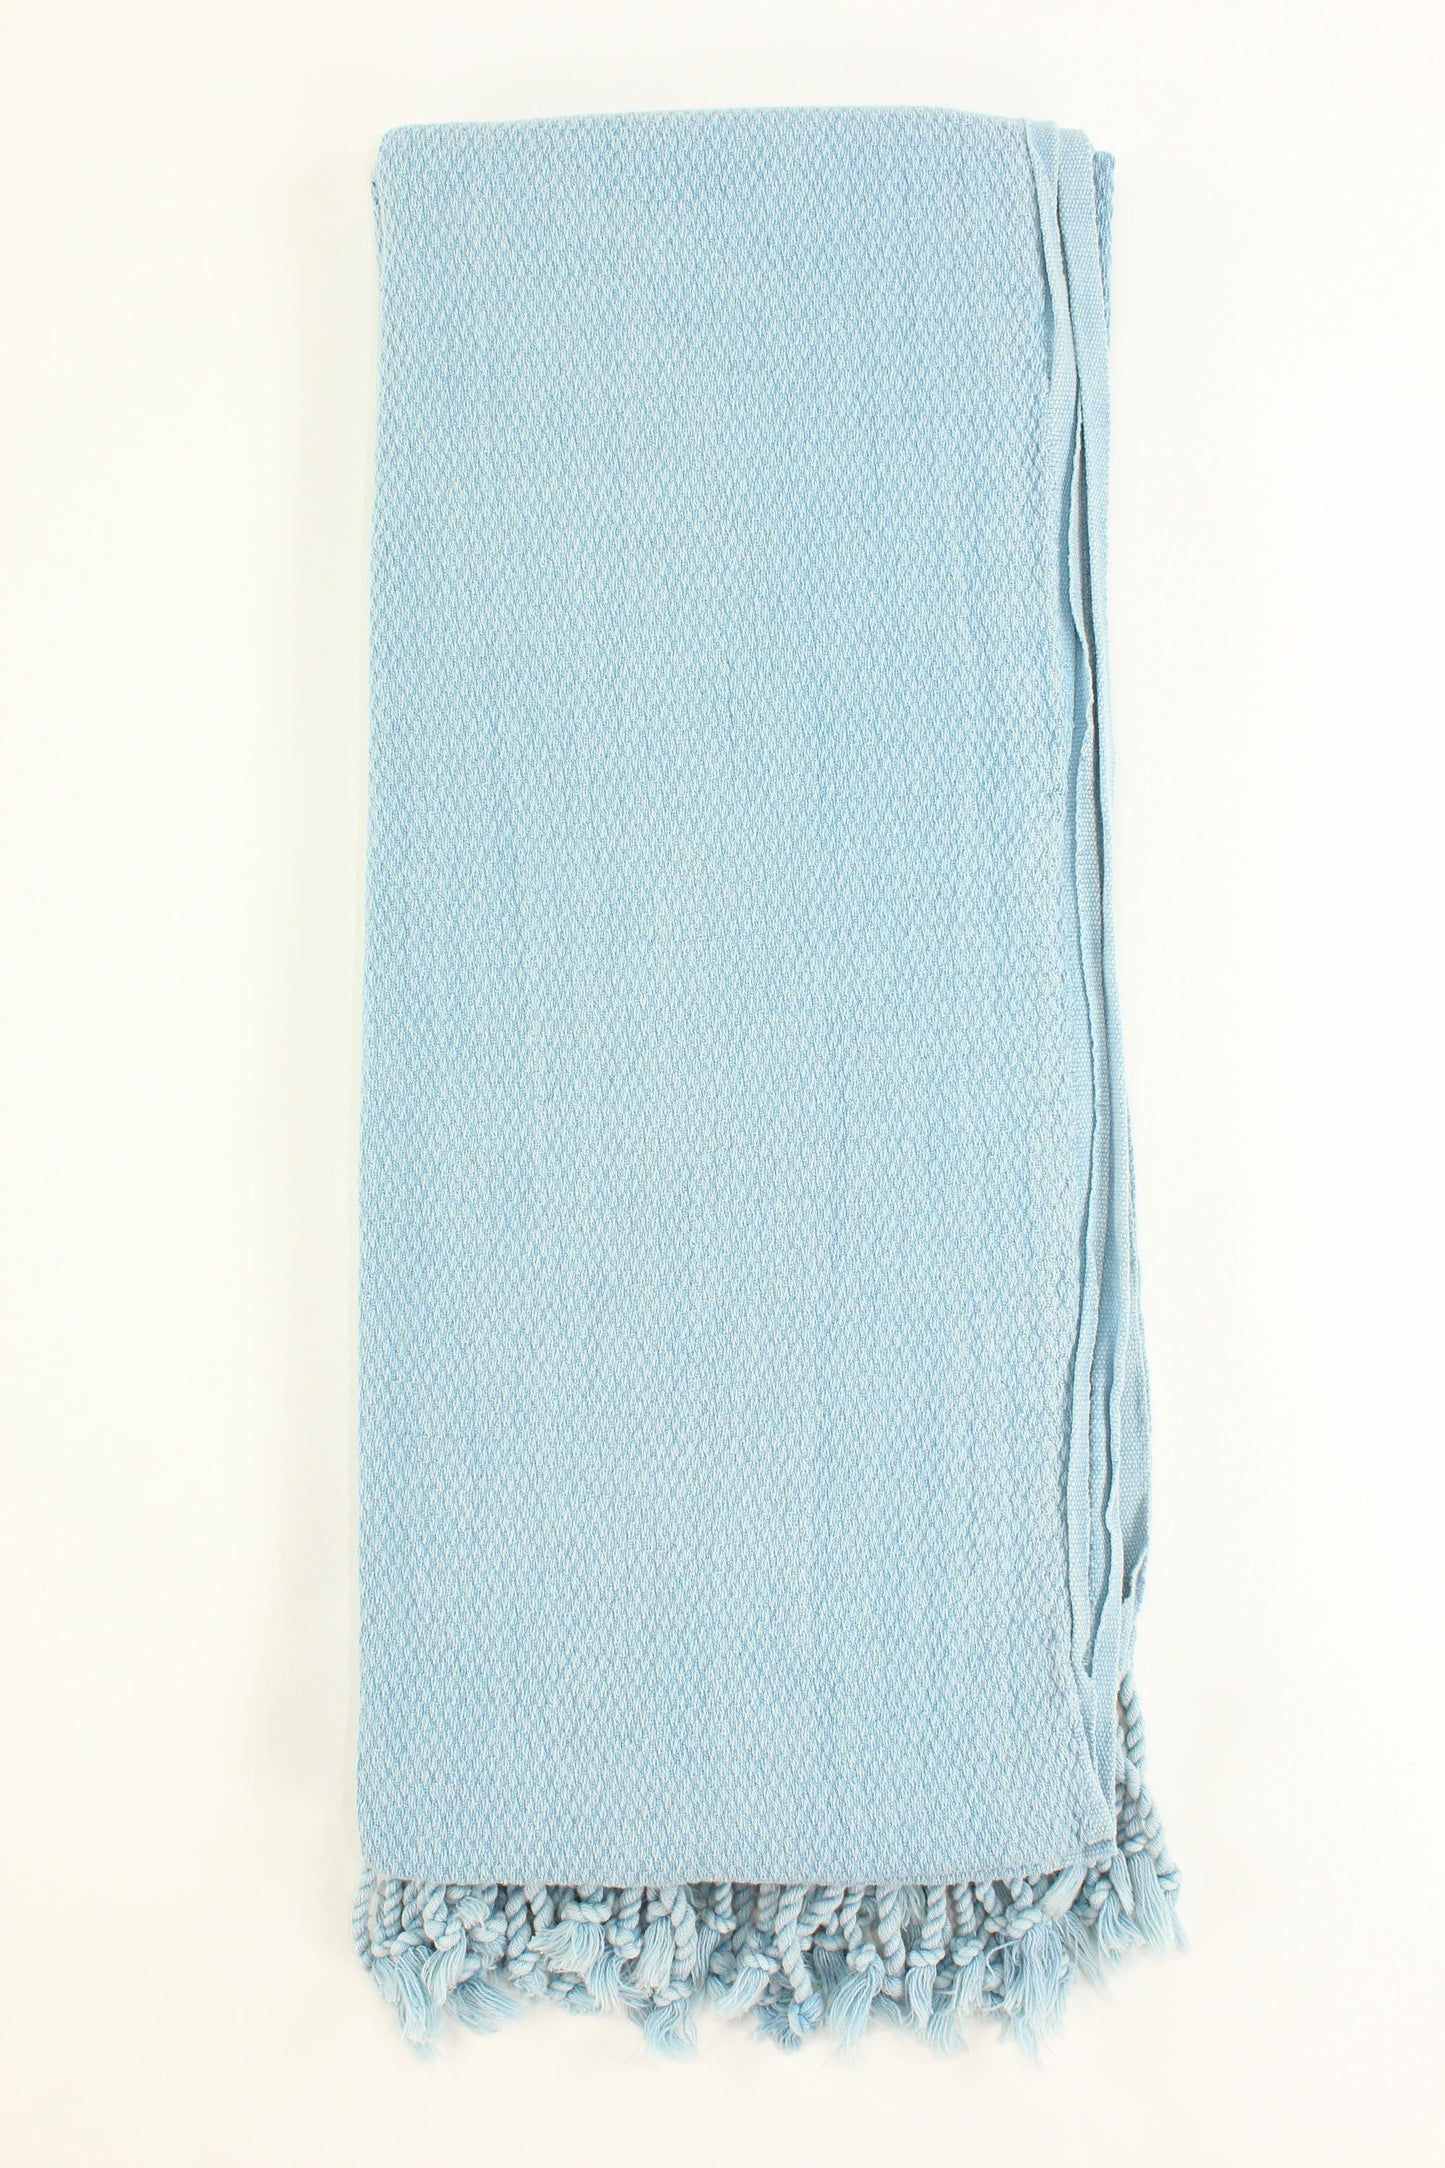 Premium Turkish Stone Washed Towel Peshtemal Fouta (Light Blue)